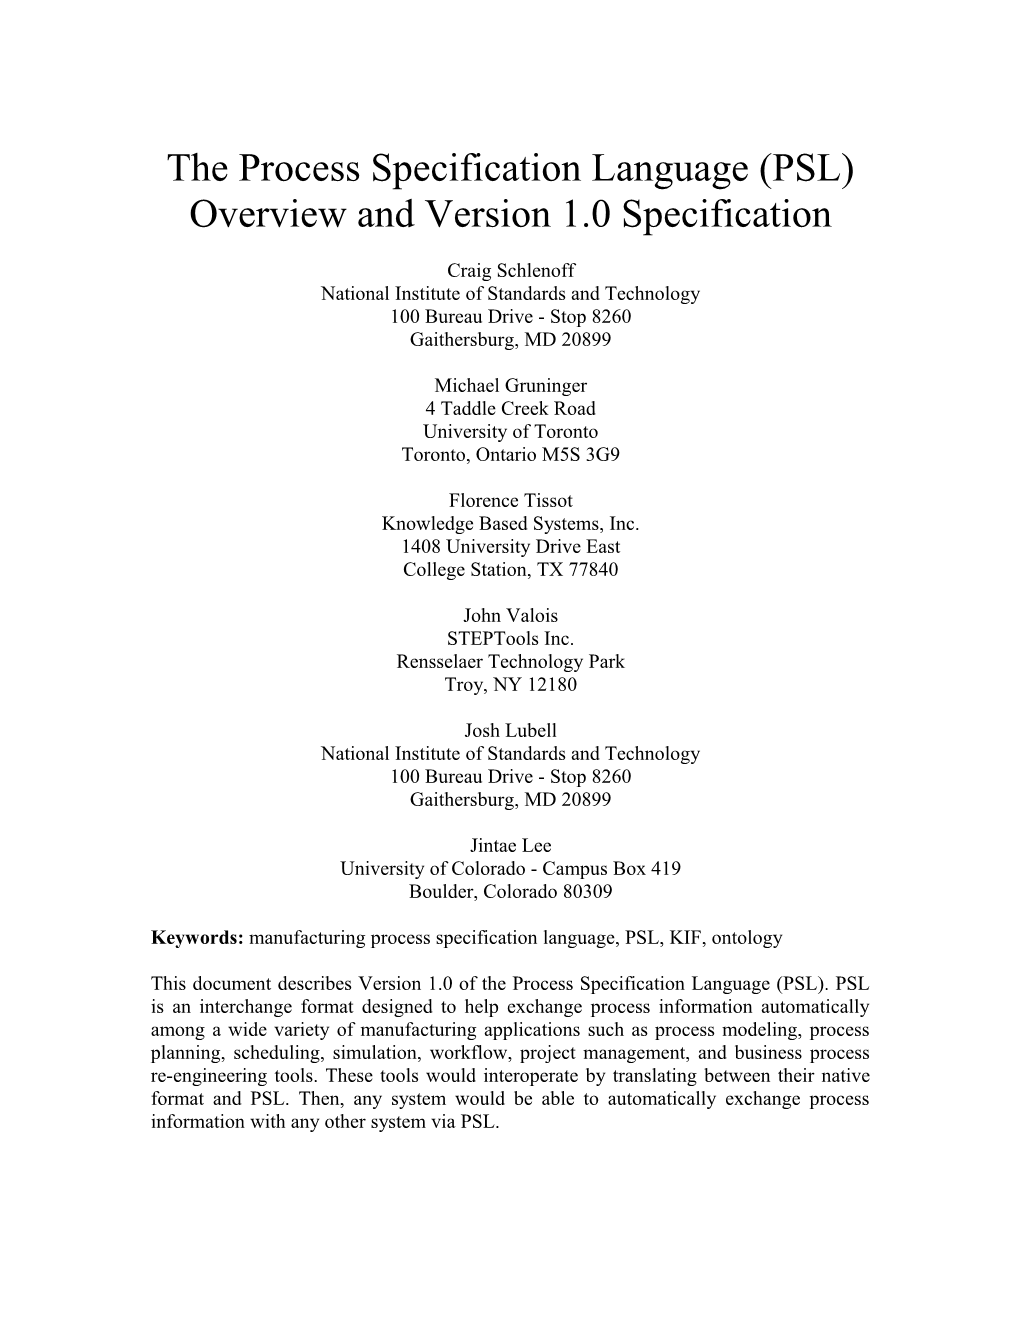 The Process Specification Language (PSL): Version 1